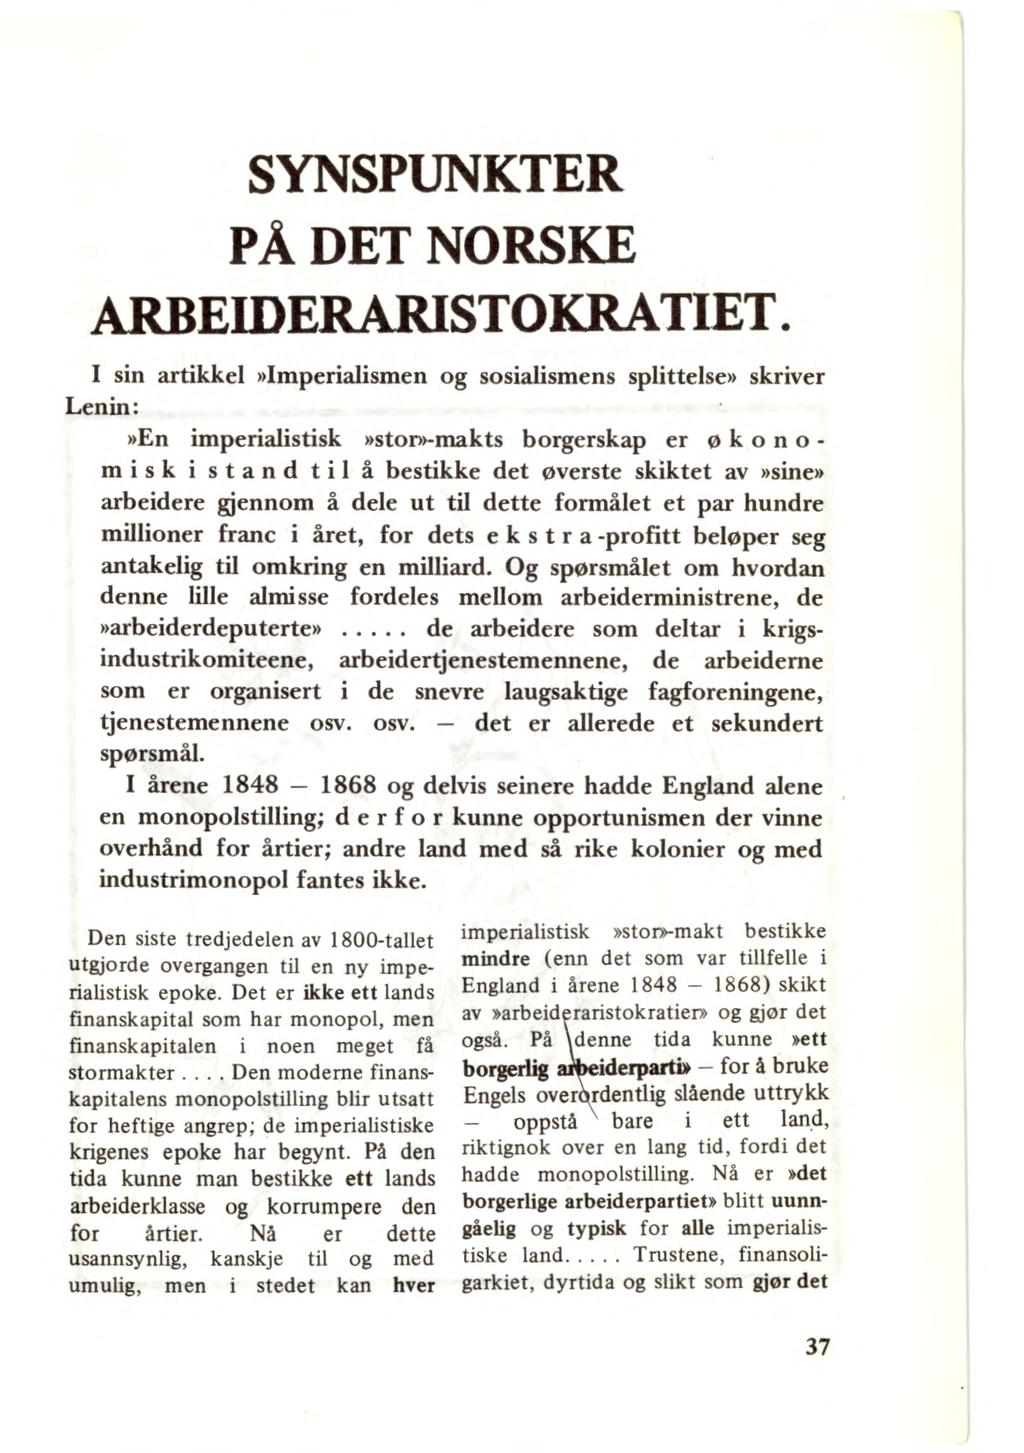 SYNSPUNKTER PÅ DET NORSKE ARBEIDERARISTOKRATIET.